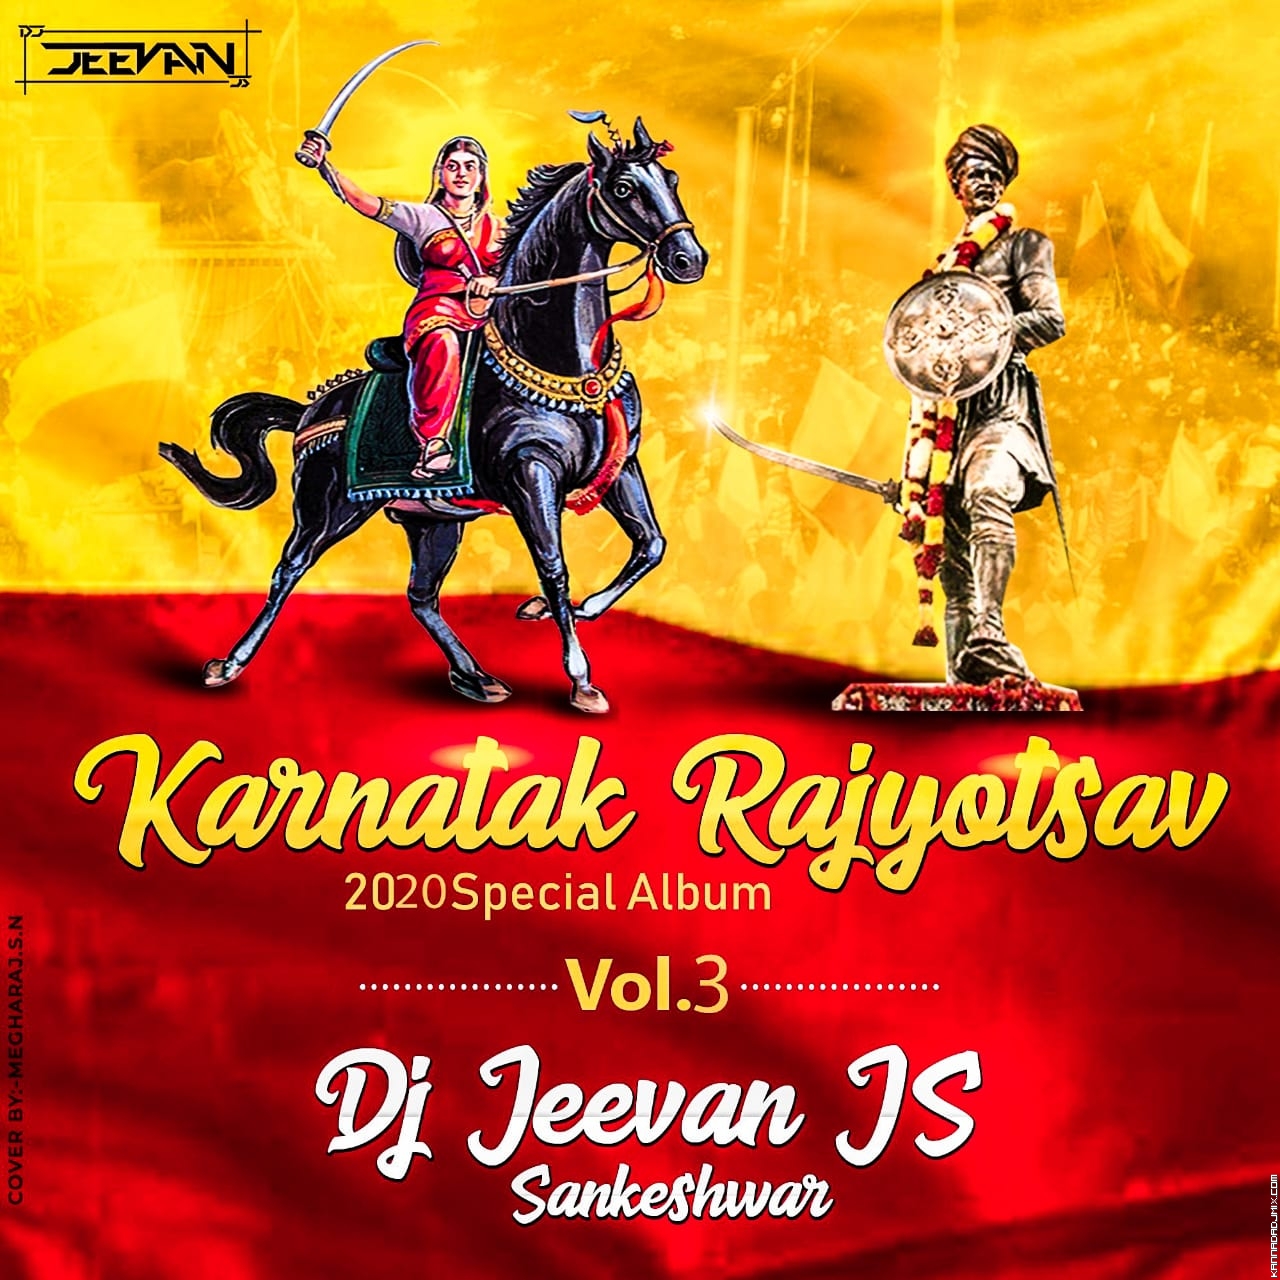 karunnde Edm Drop2020 mix by dj jeevan js sankeshwar.mp3